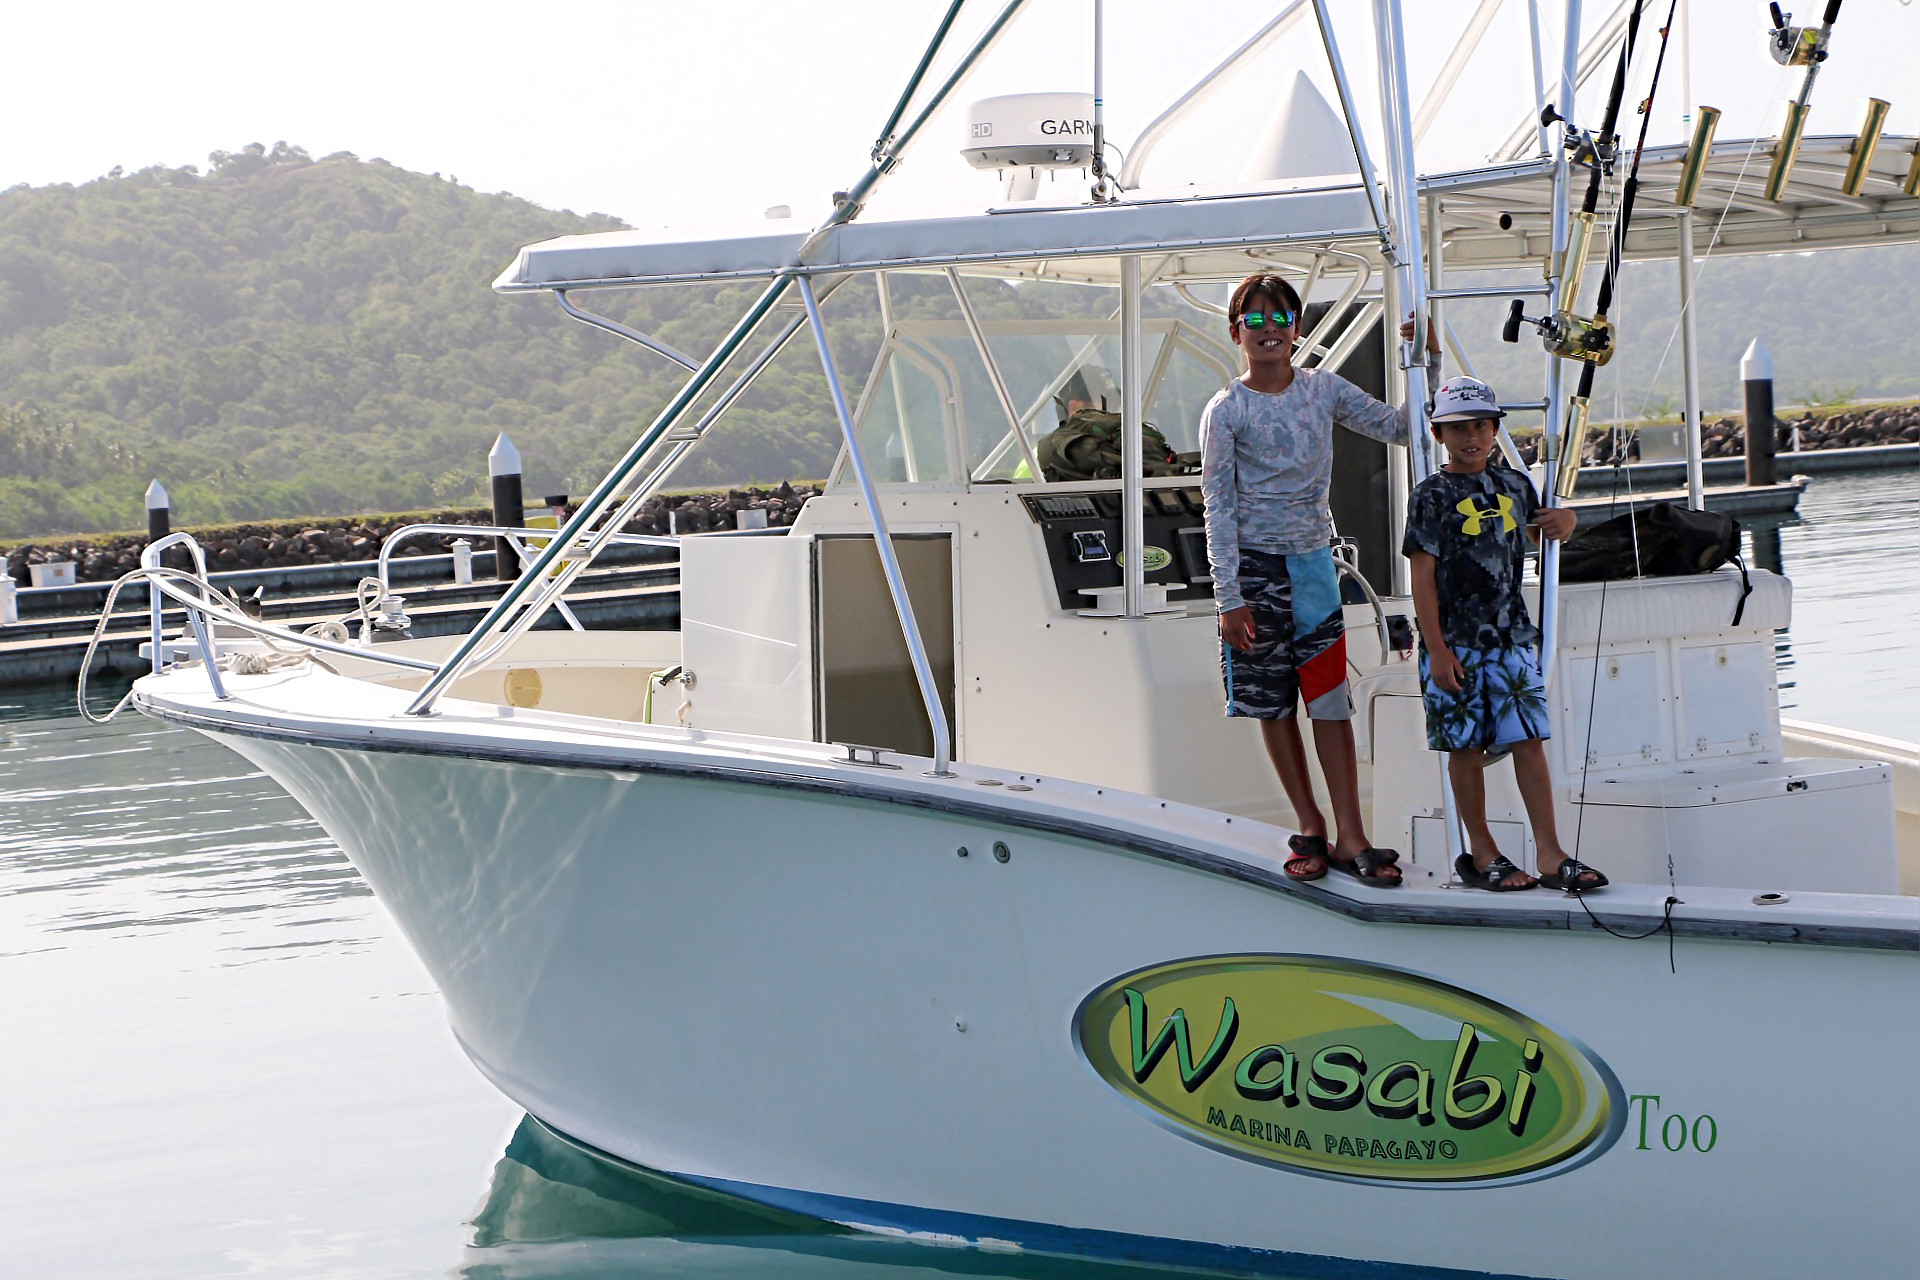 Wasabi Fishing - The Boat